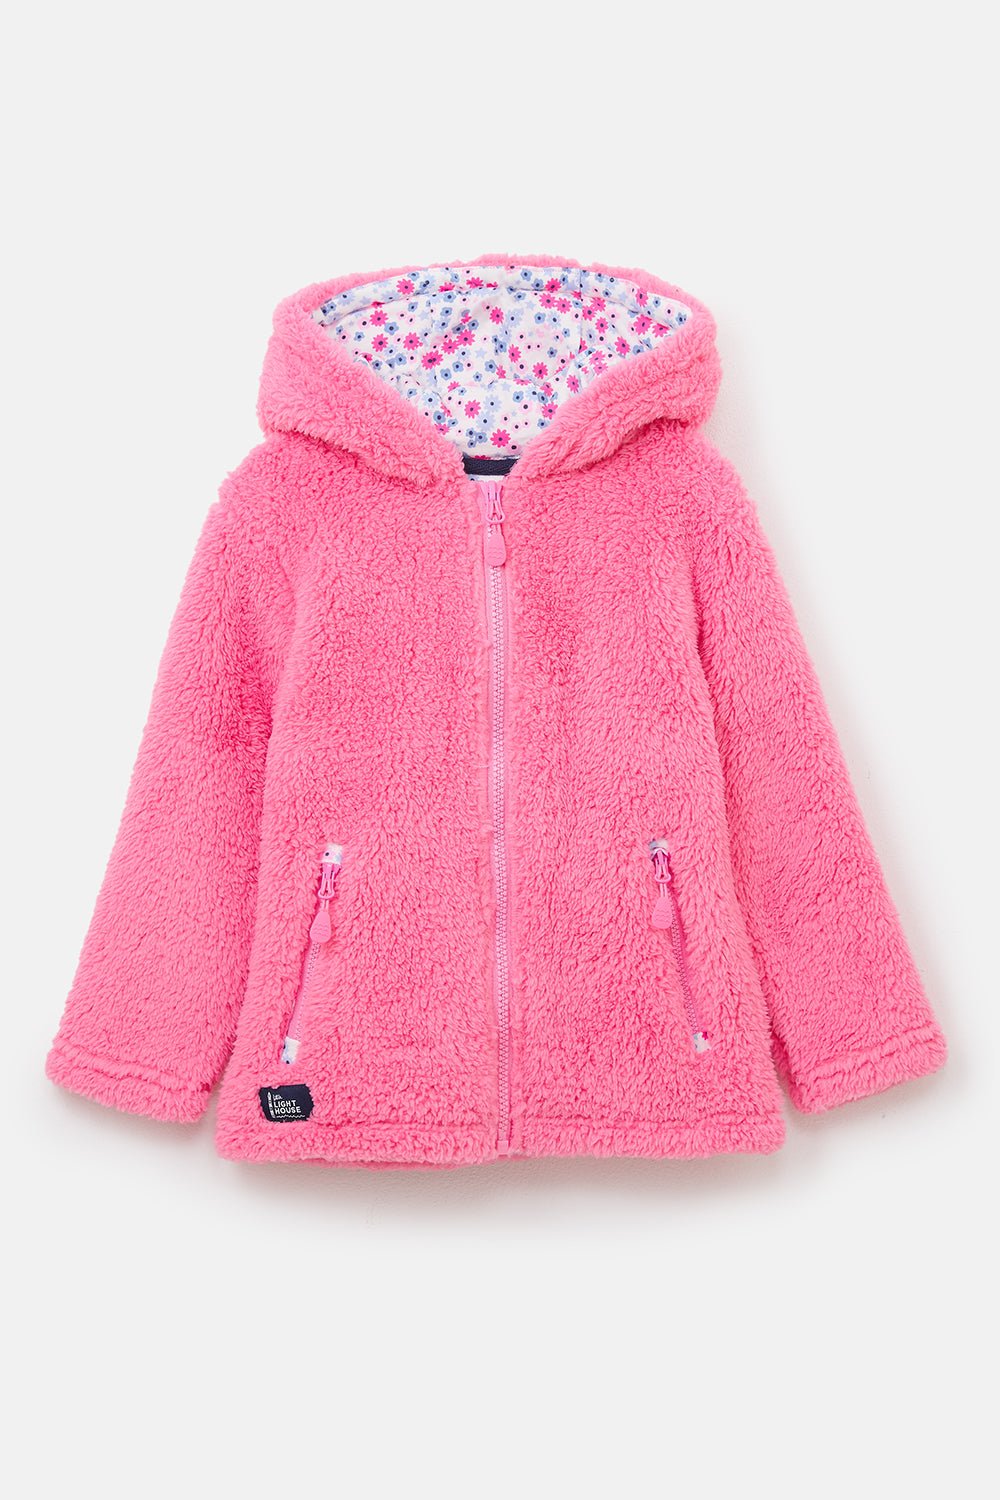 Gracie Kids' Fleece, Blush Pink